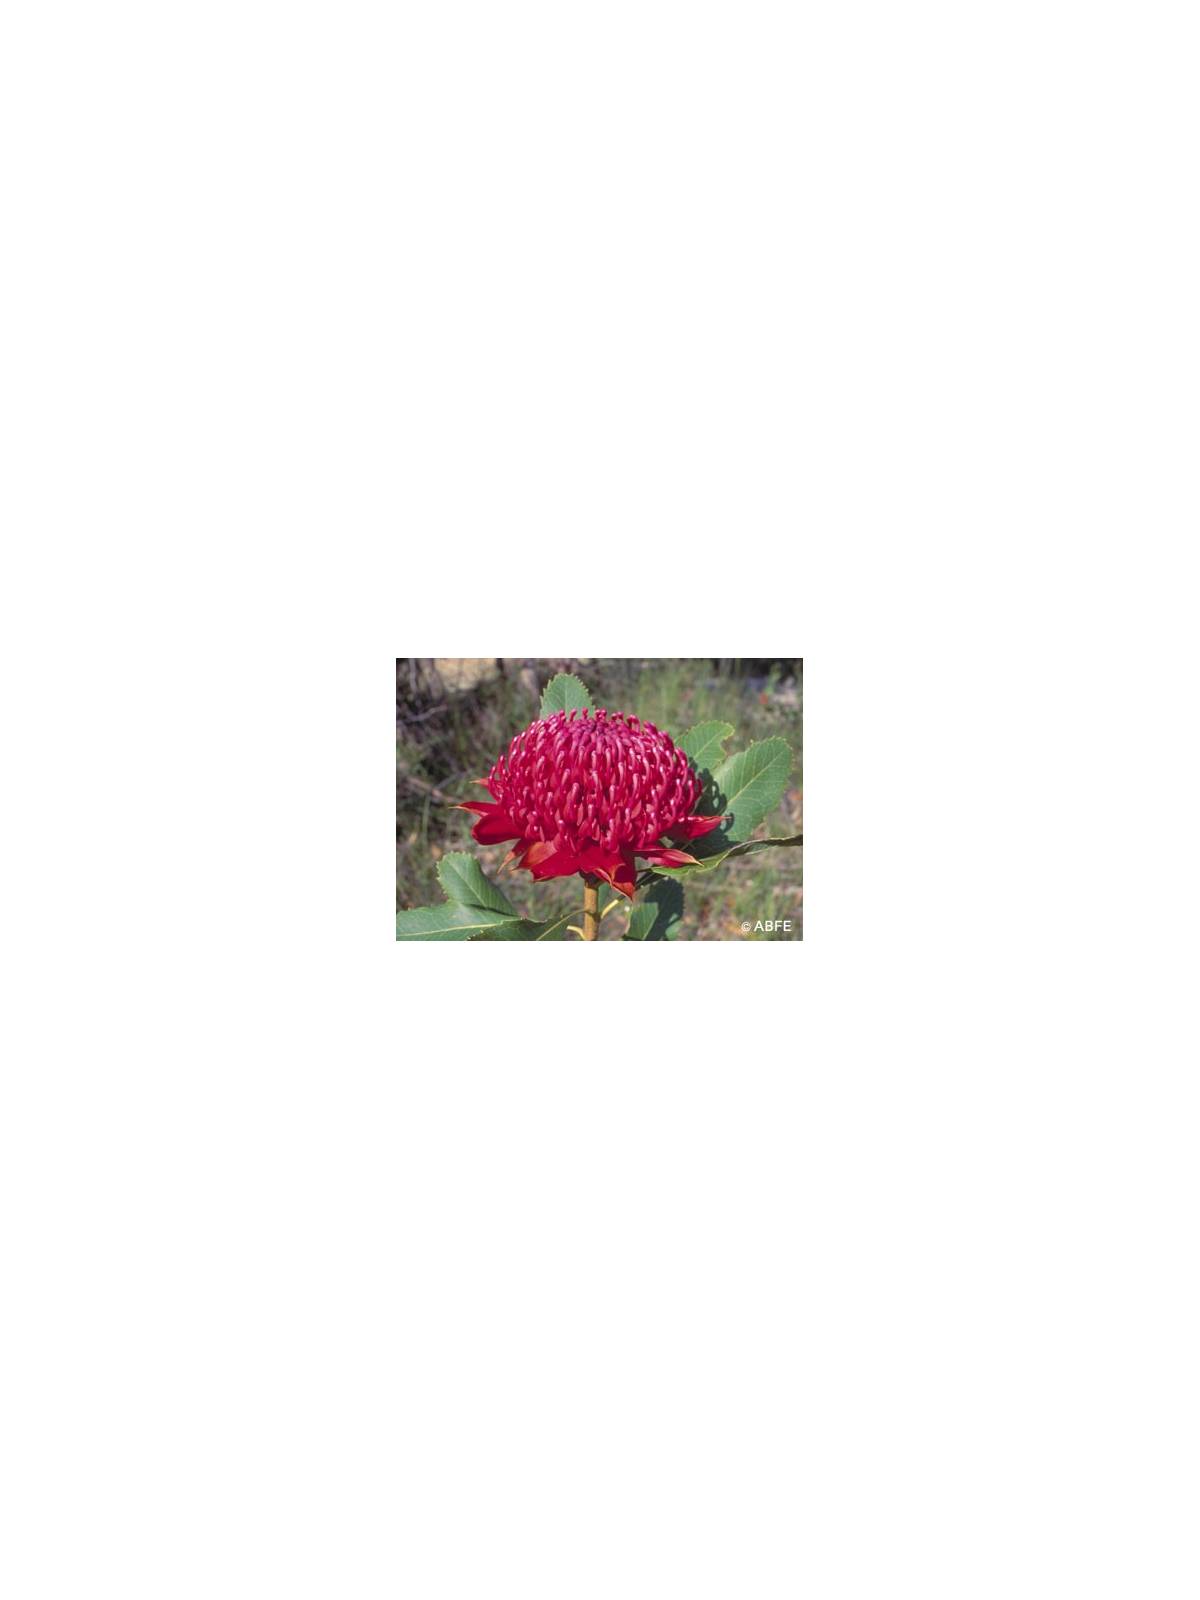 Waratah Flower Australian Bush Flower Essences